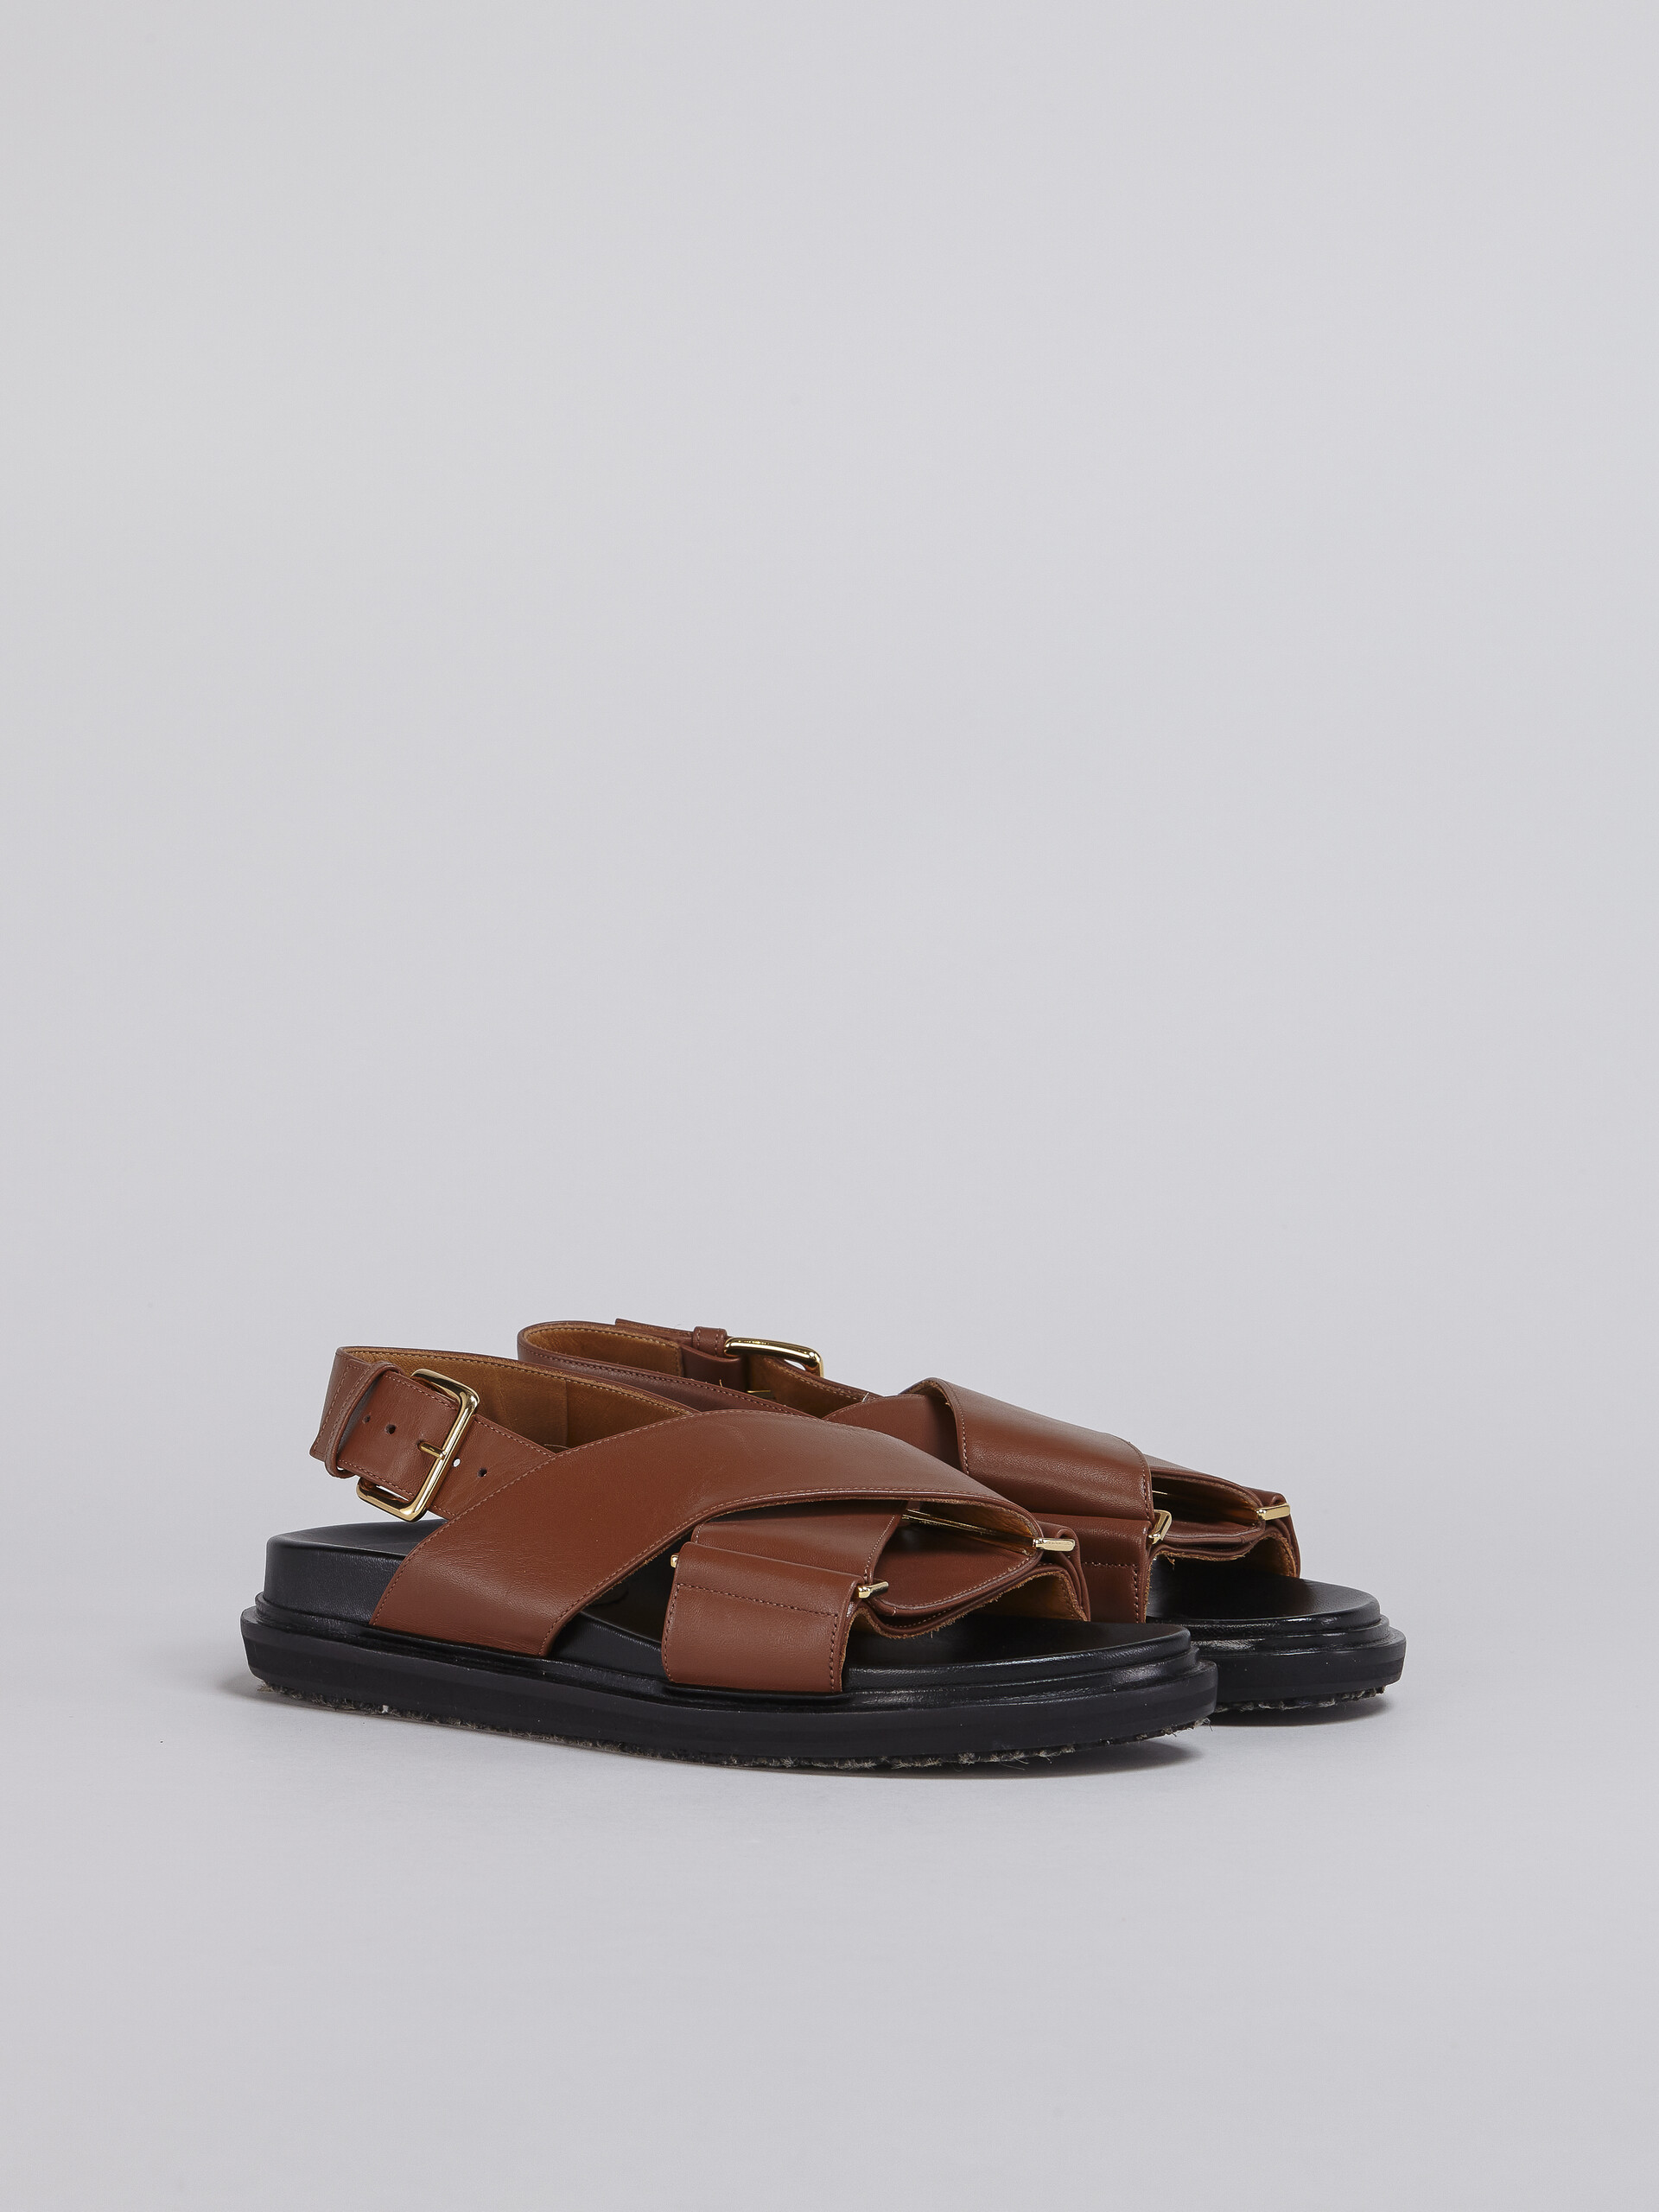 Sandales fussbett en cuir marron - Sandales - Image 2